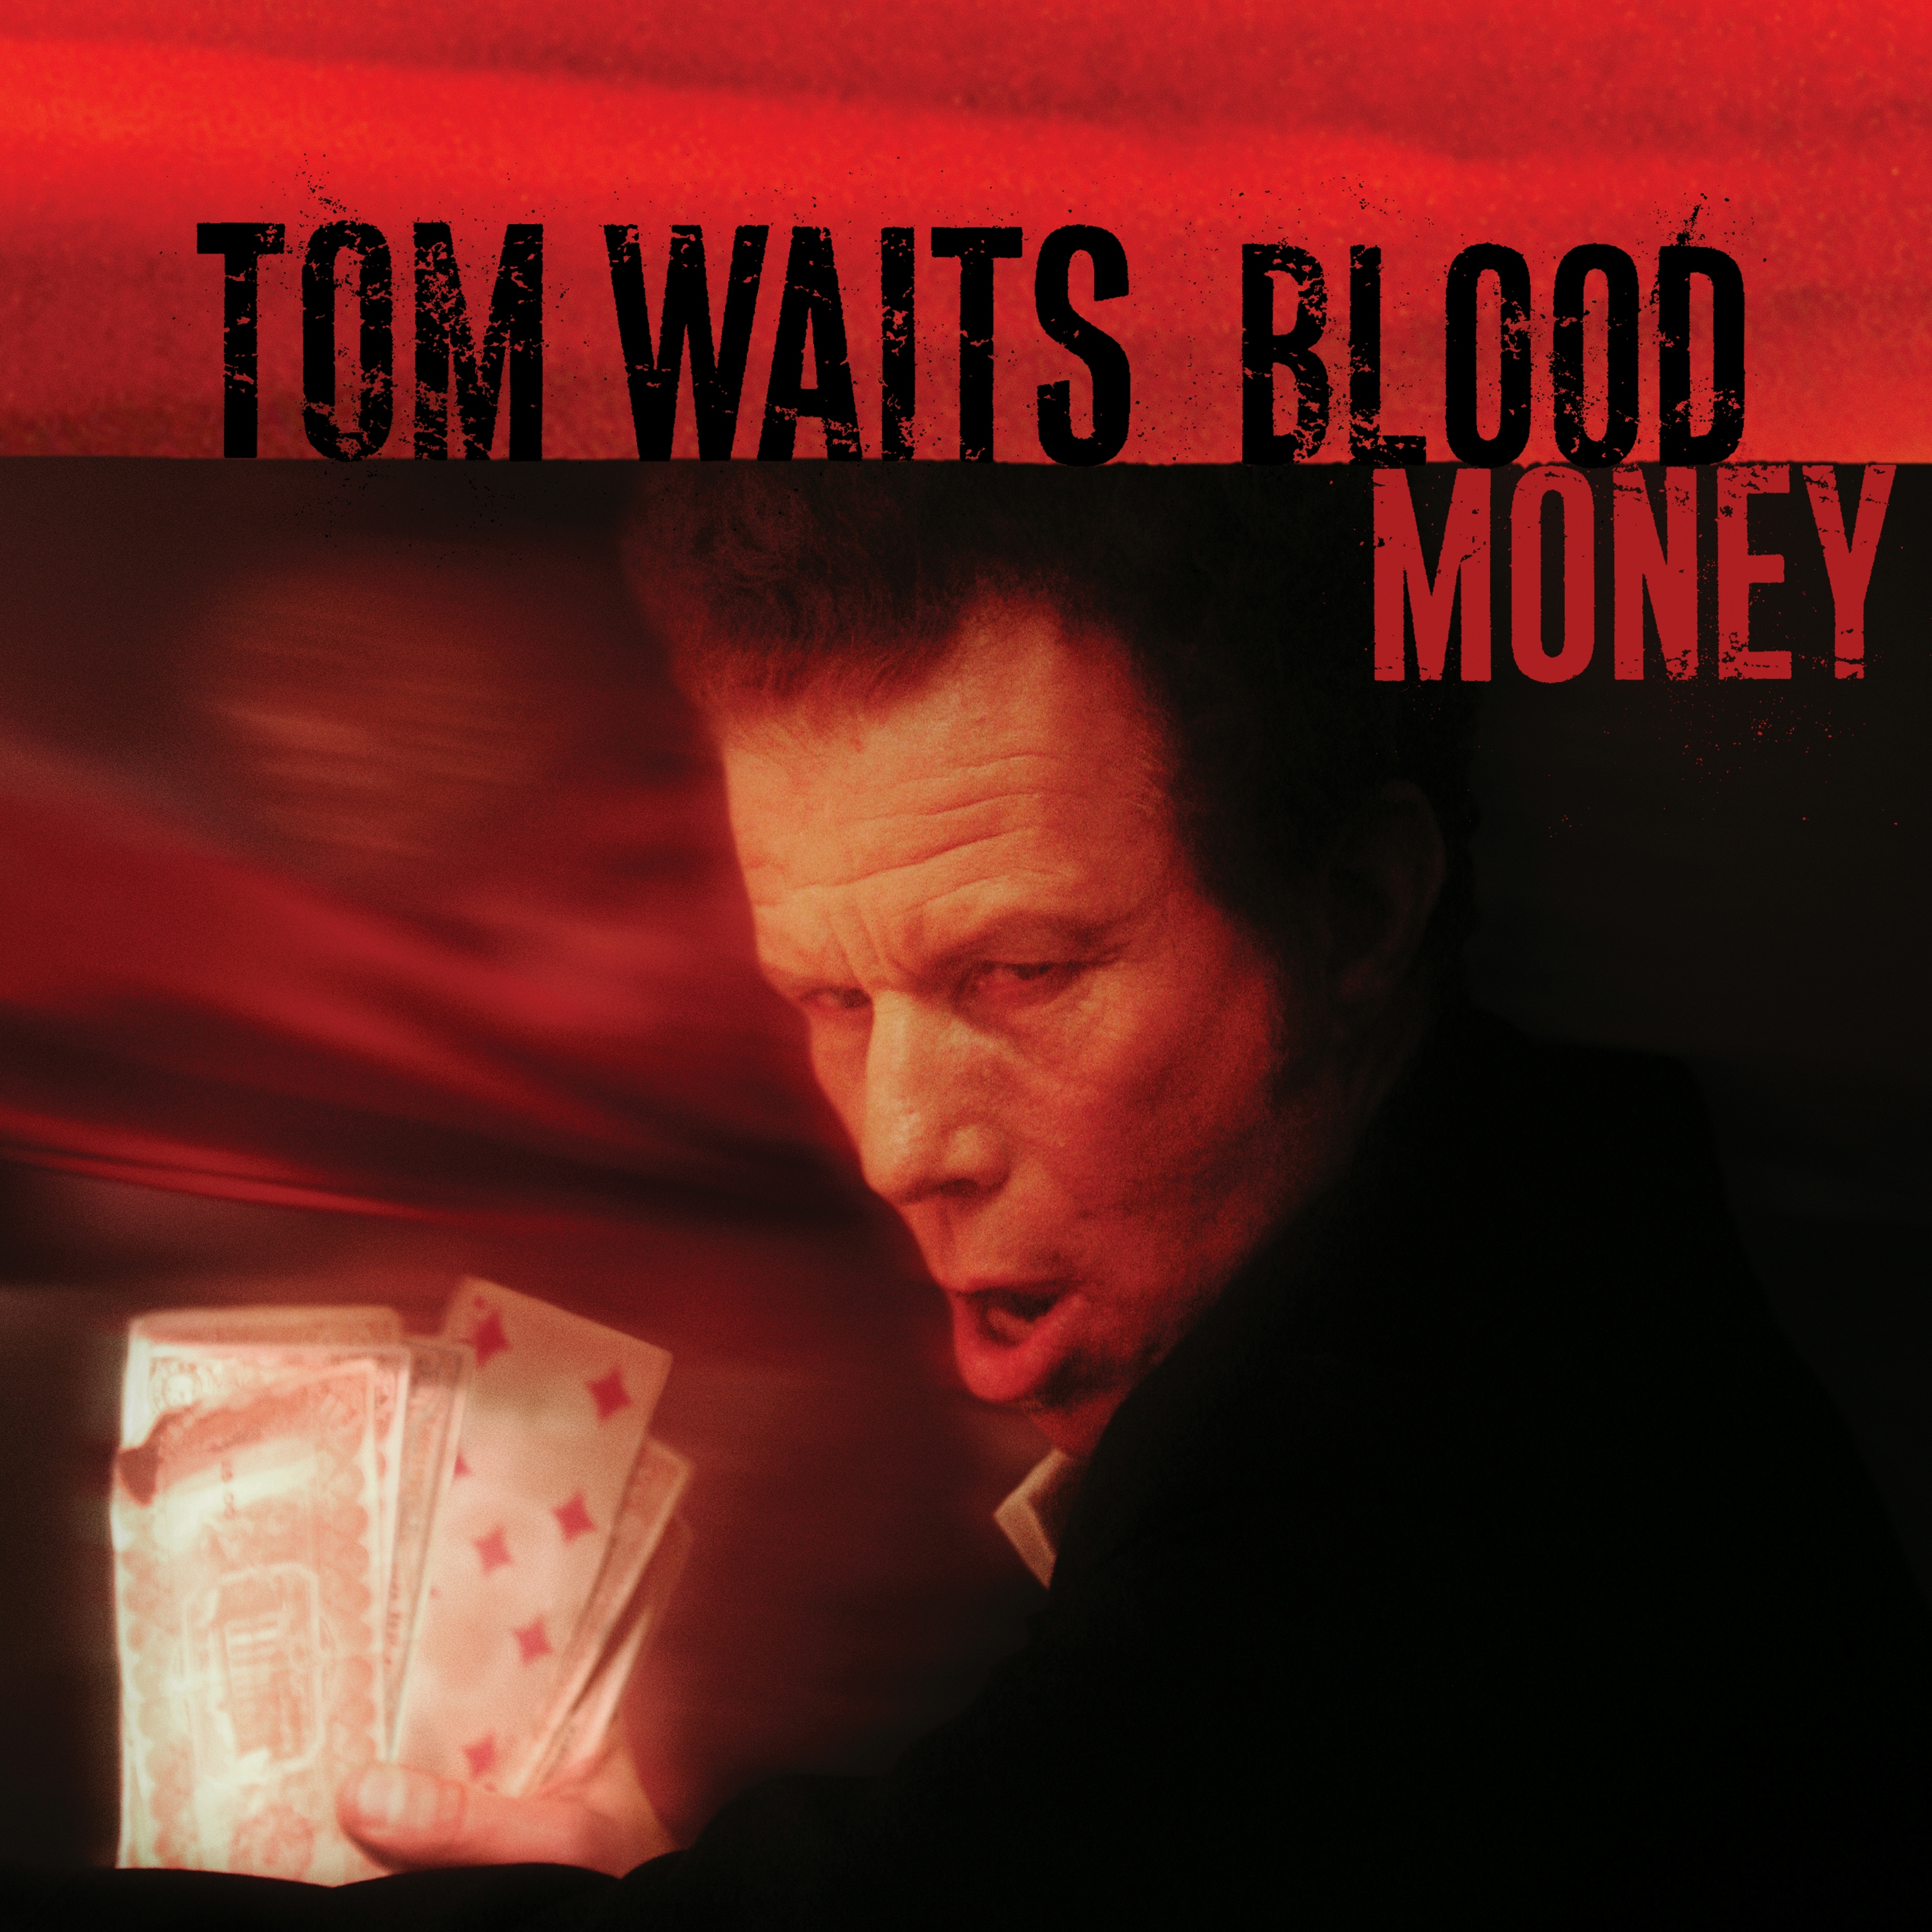 Album artwork for Blood Money by Tom Waits